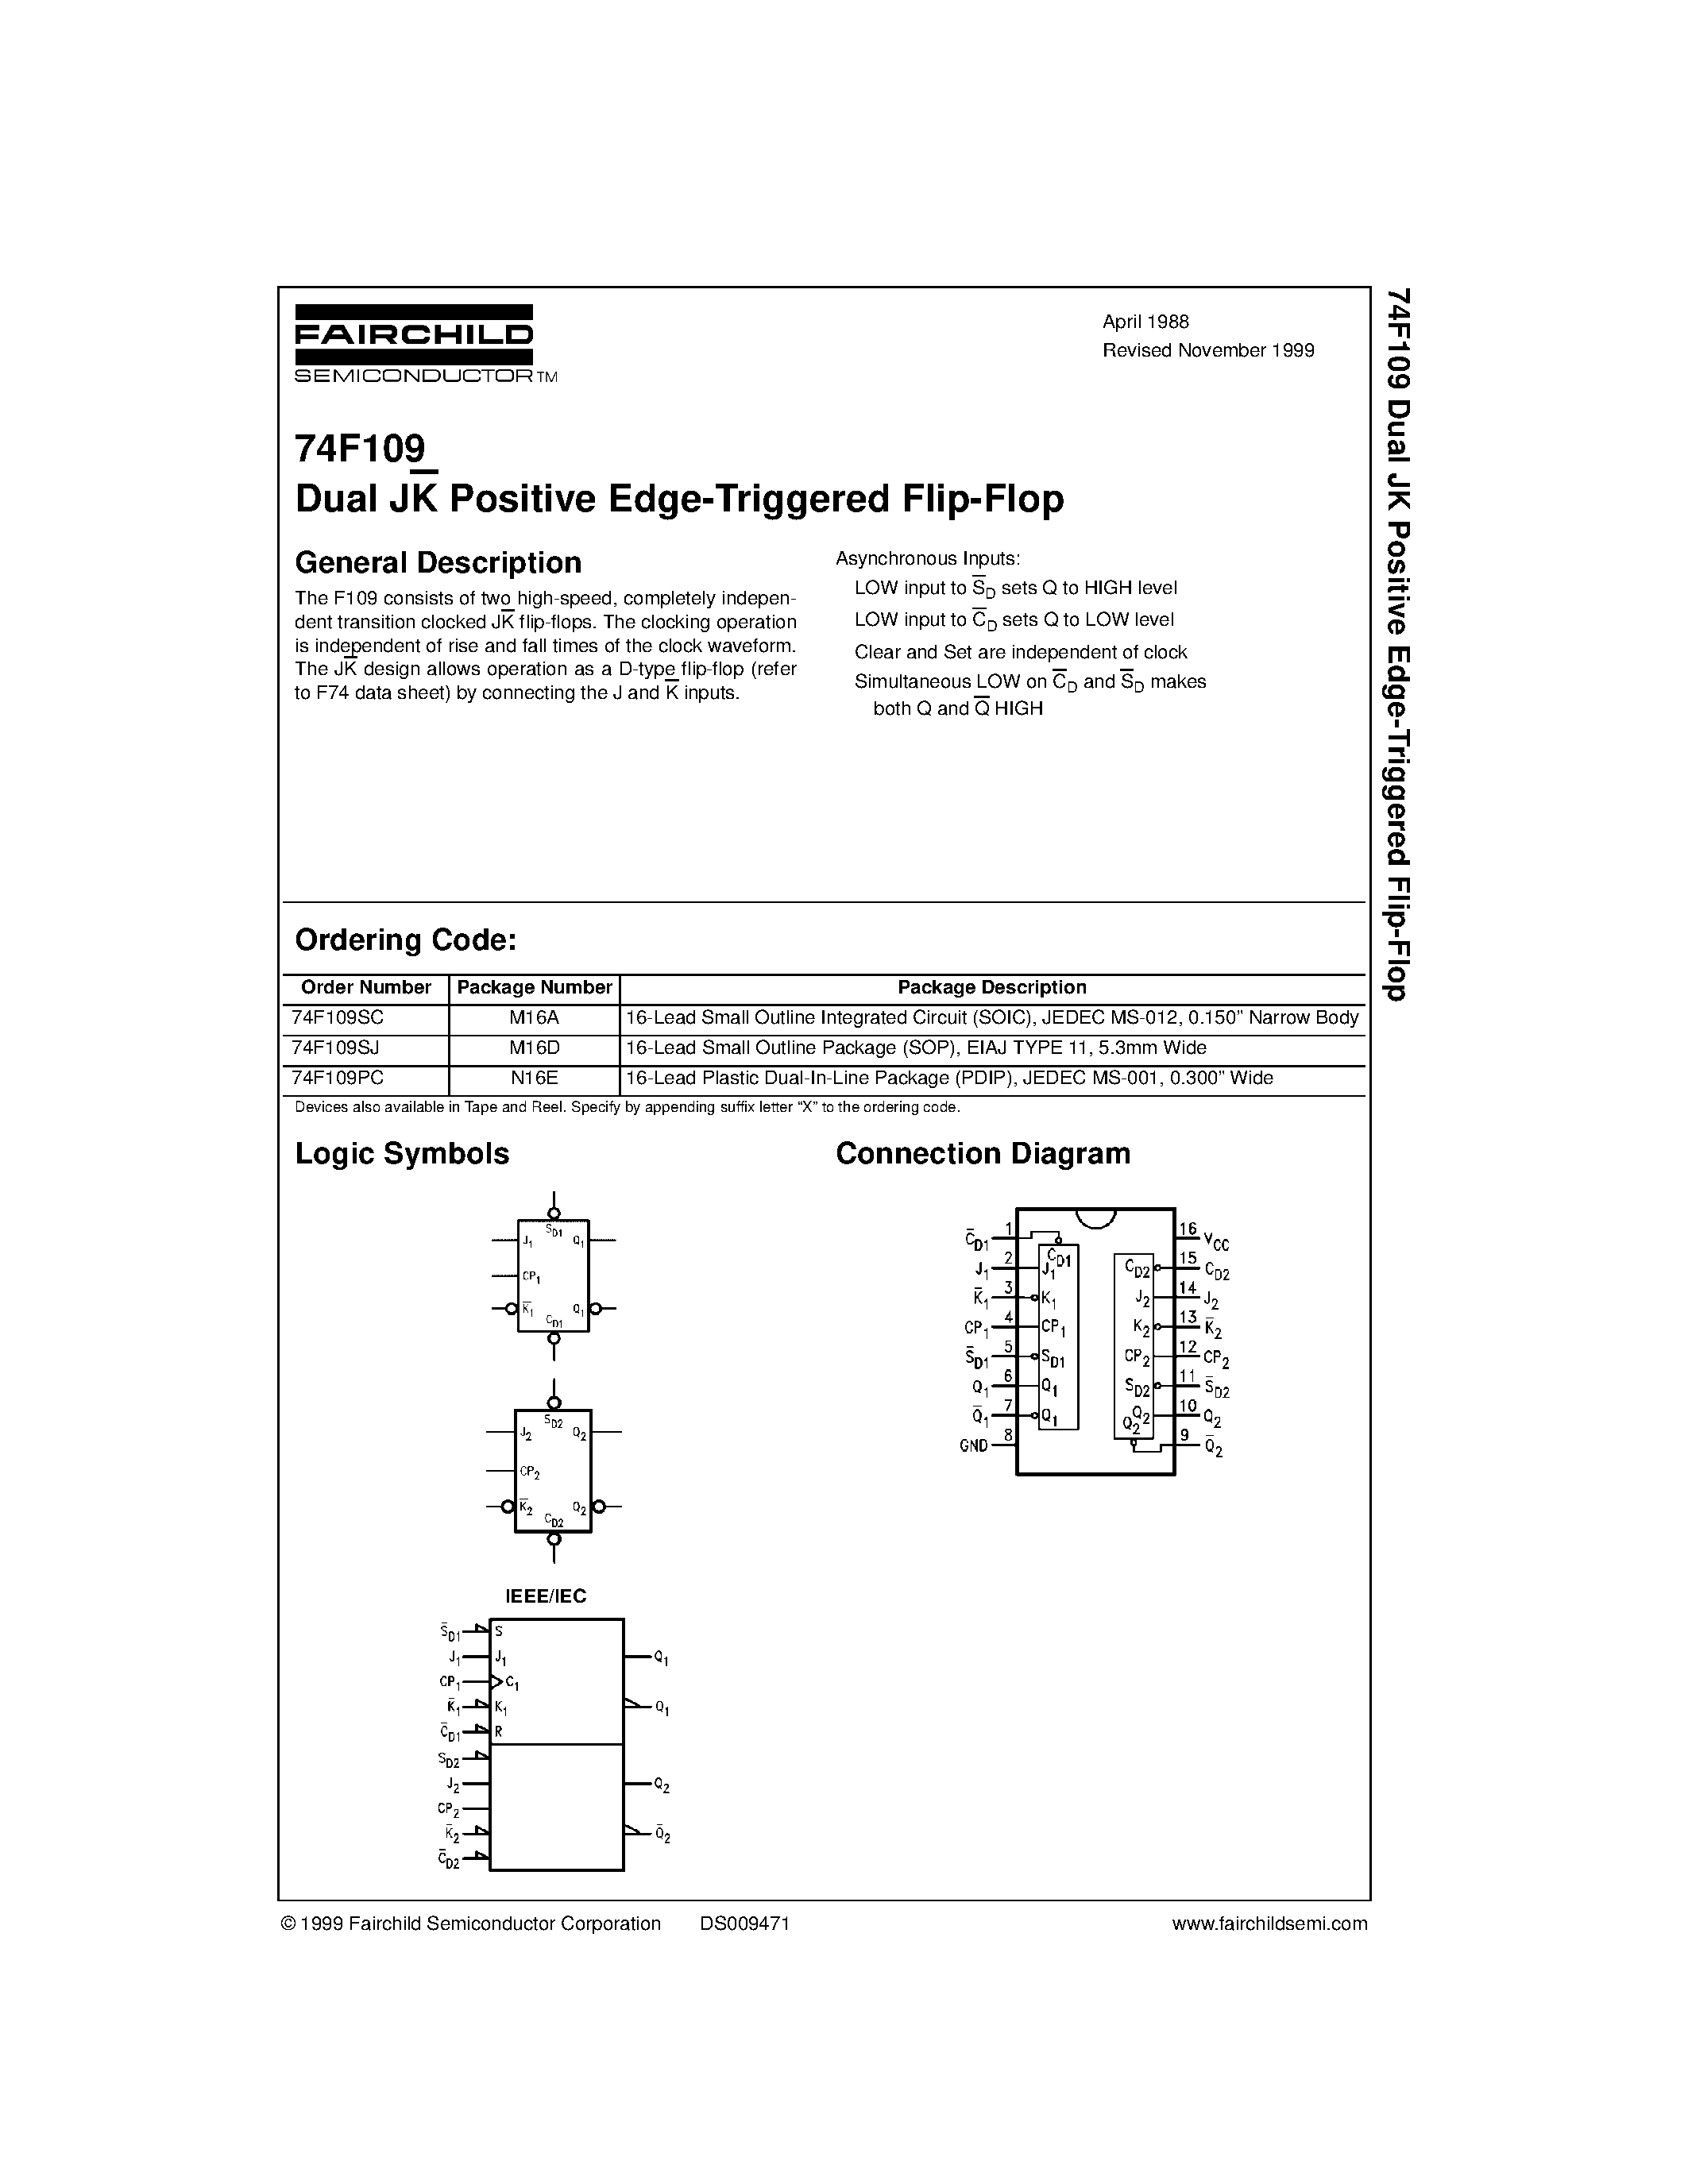 Datasheet 74F109 - Dual JK Positive Edge-Triggered Flip-Flop page 1